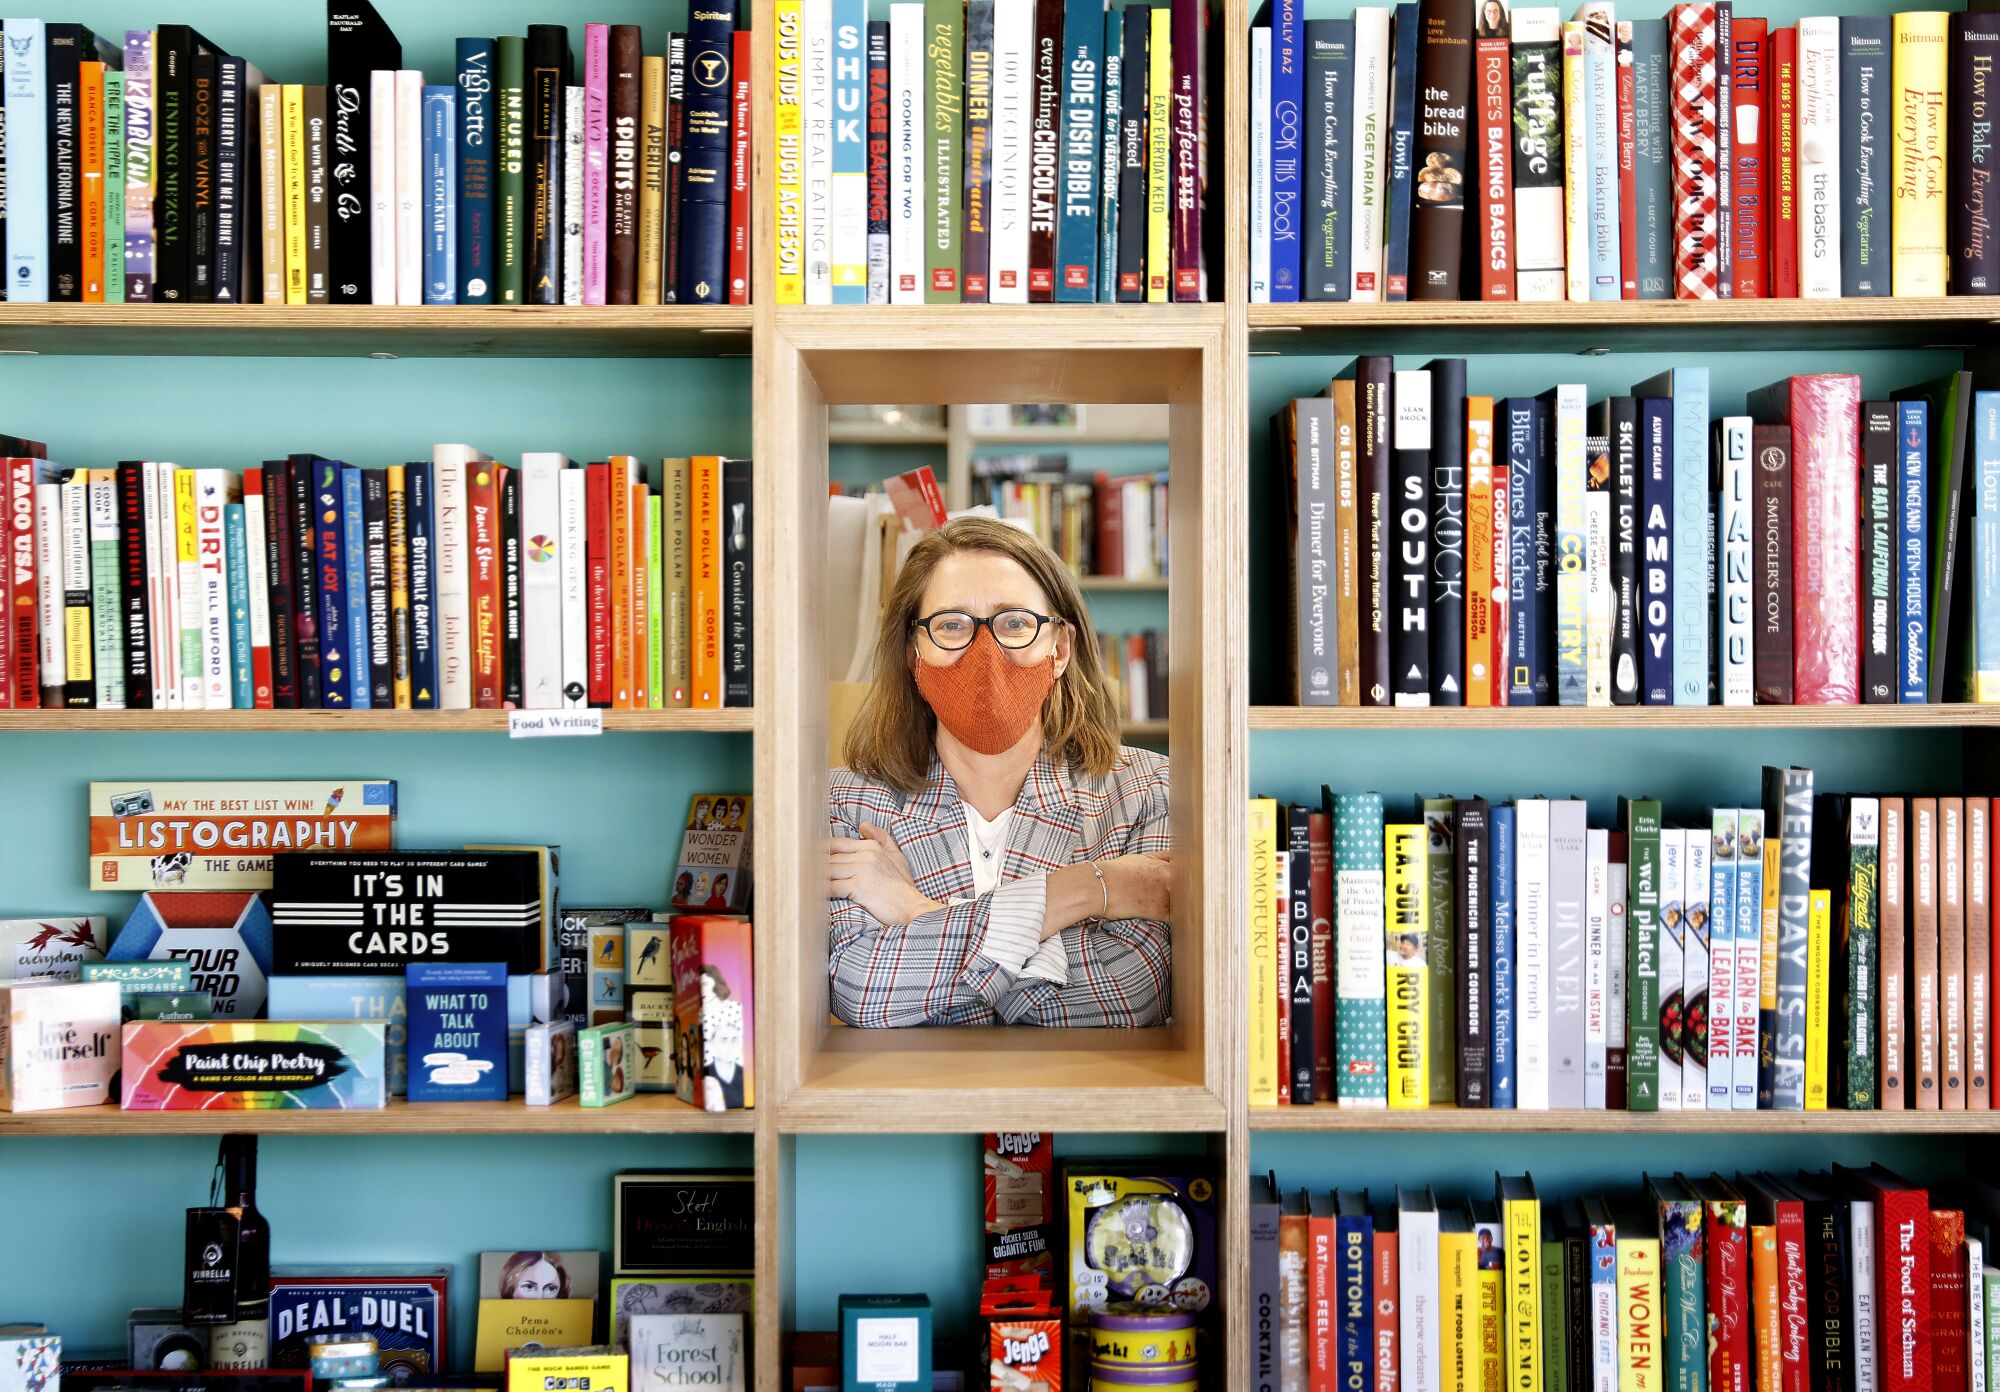 A woman in an orange mask peeking through a hole in a bookshelf.